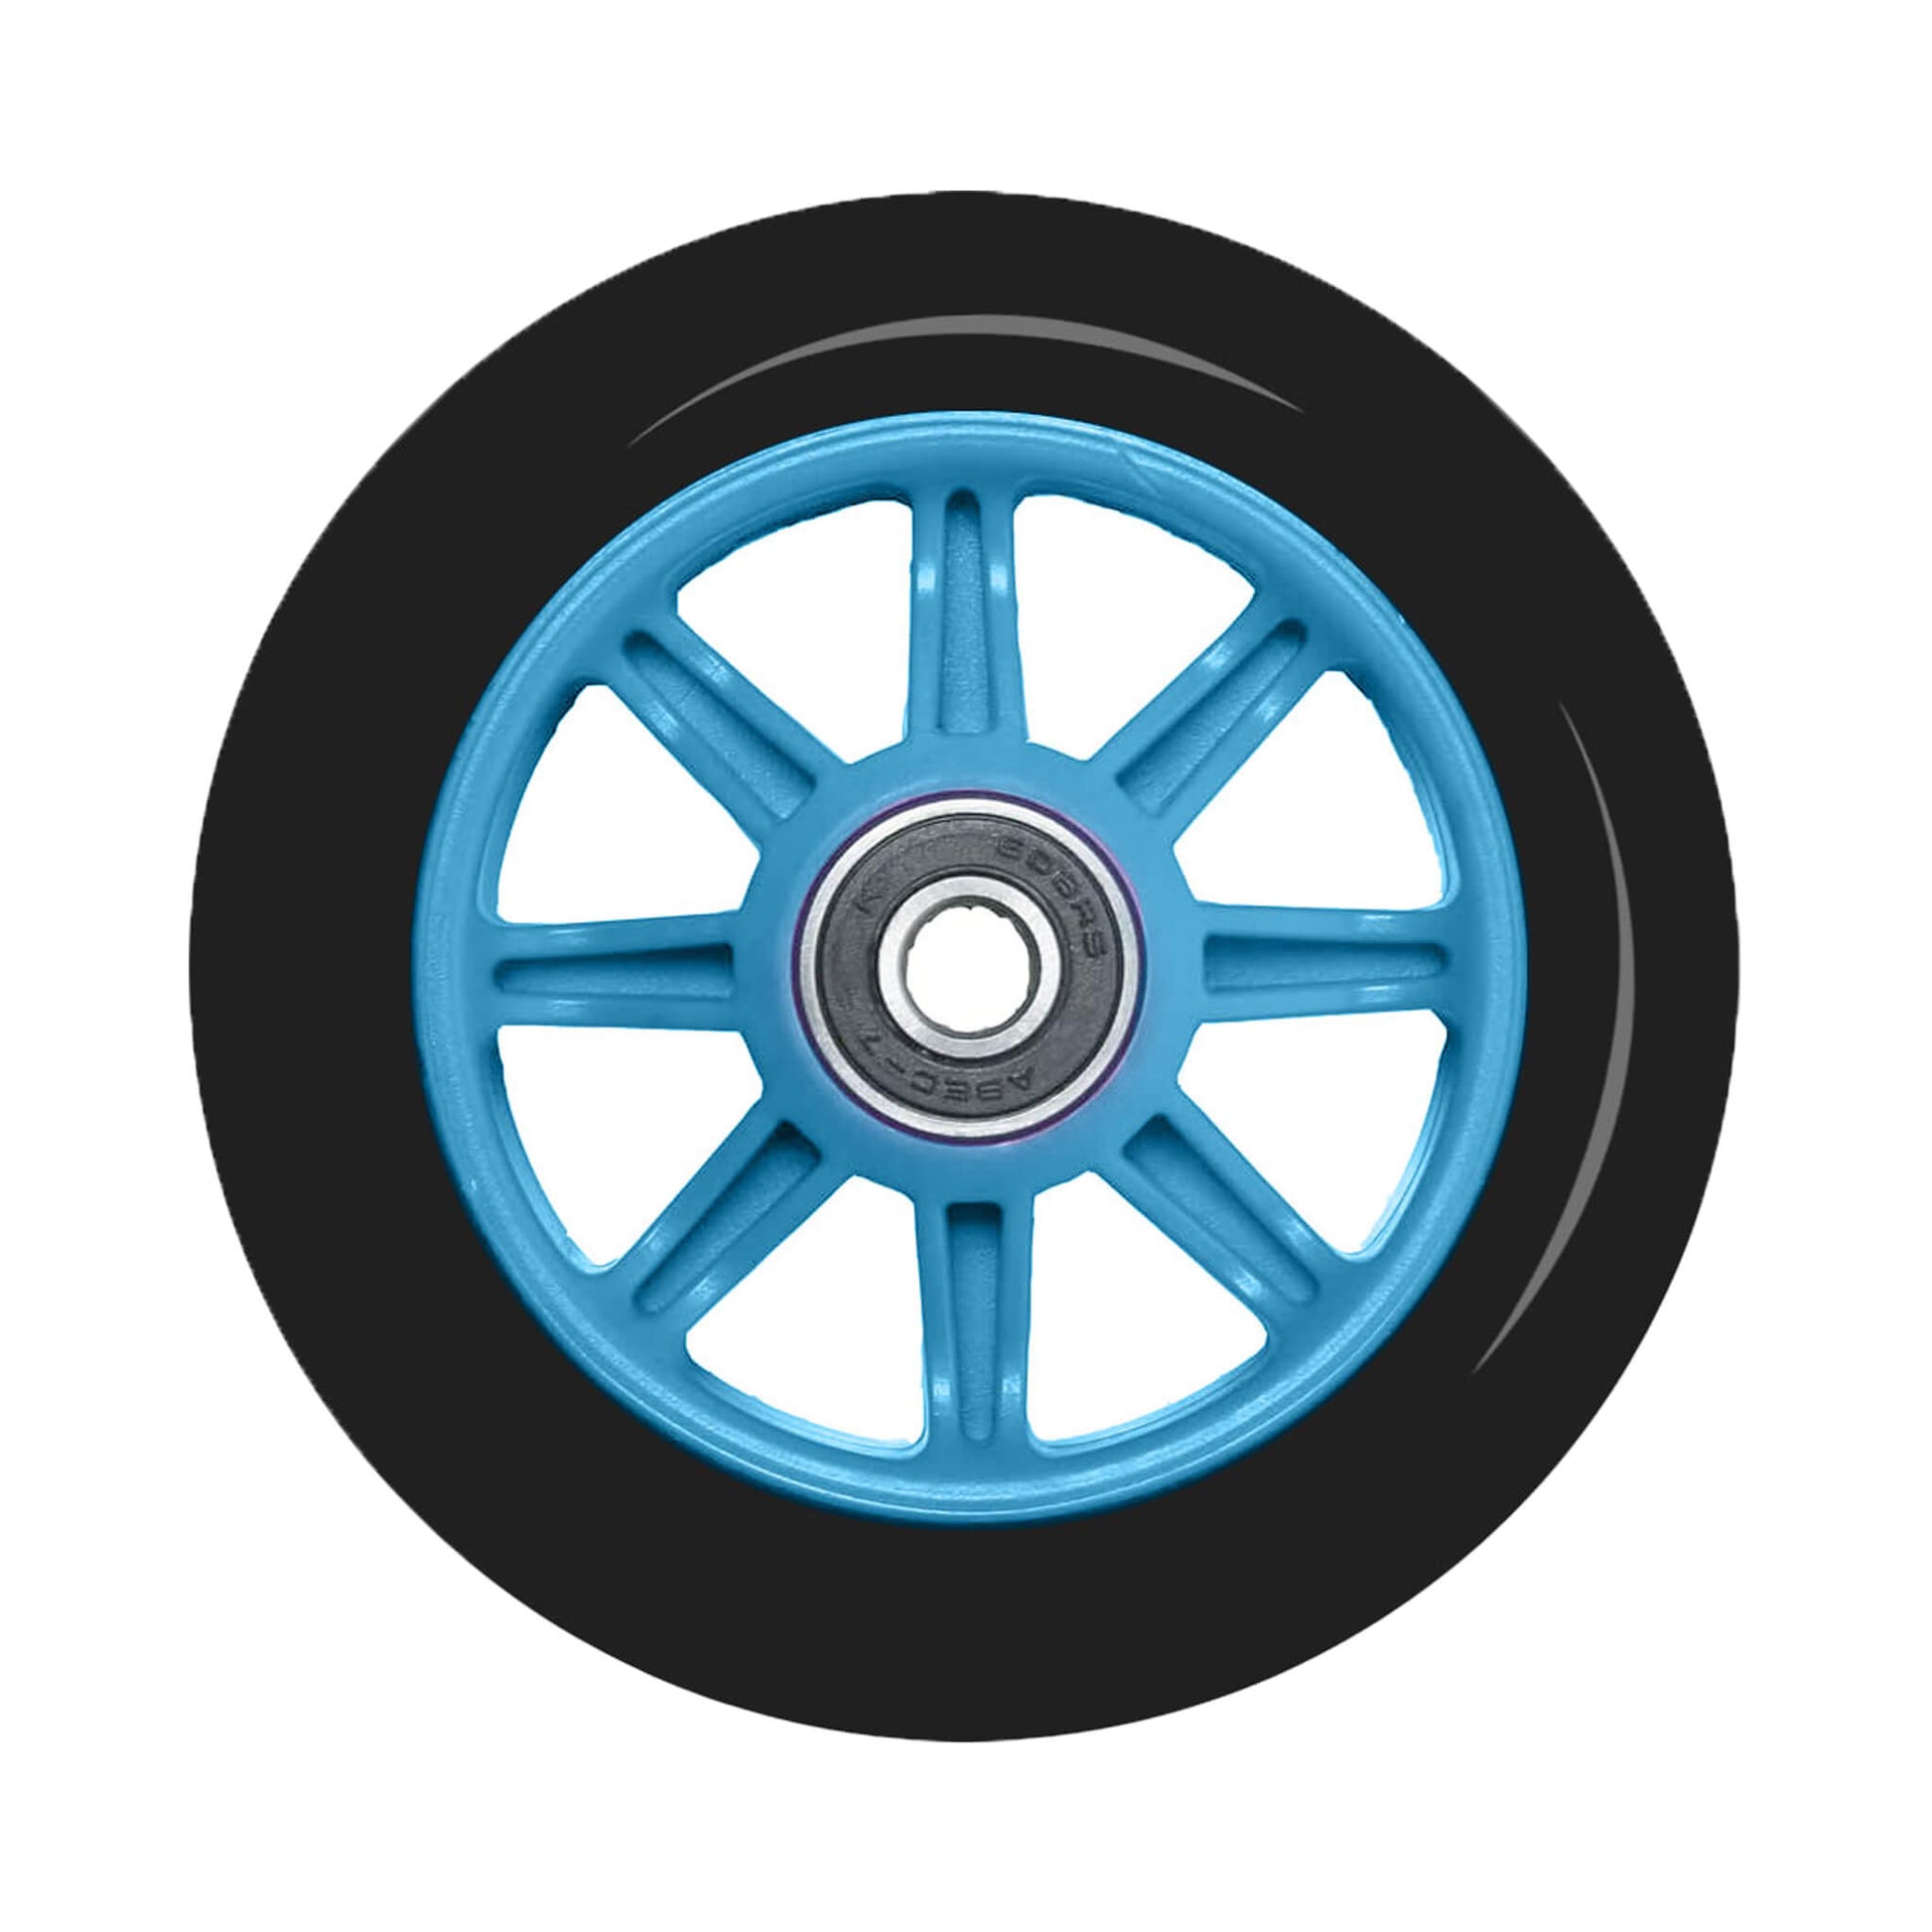 Freedare Blue 100mm Replacement Scooter Wheels（Set of 4） – FREEDARESPORT